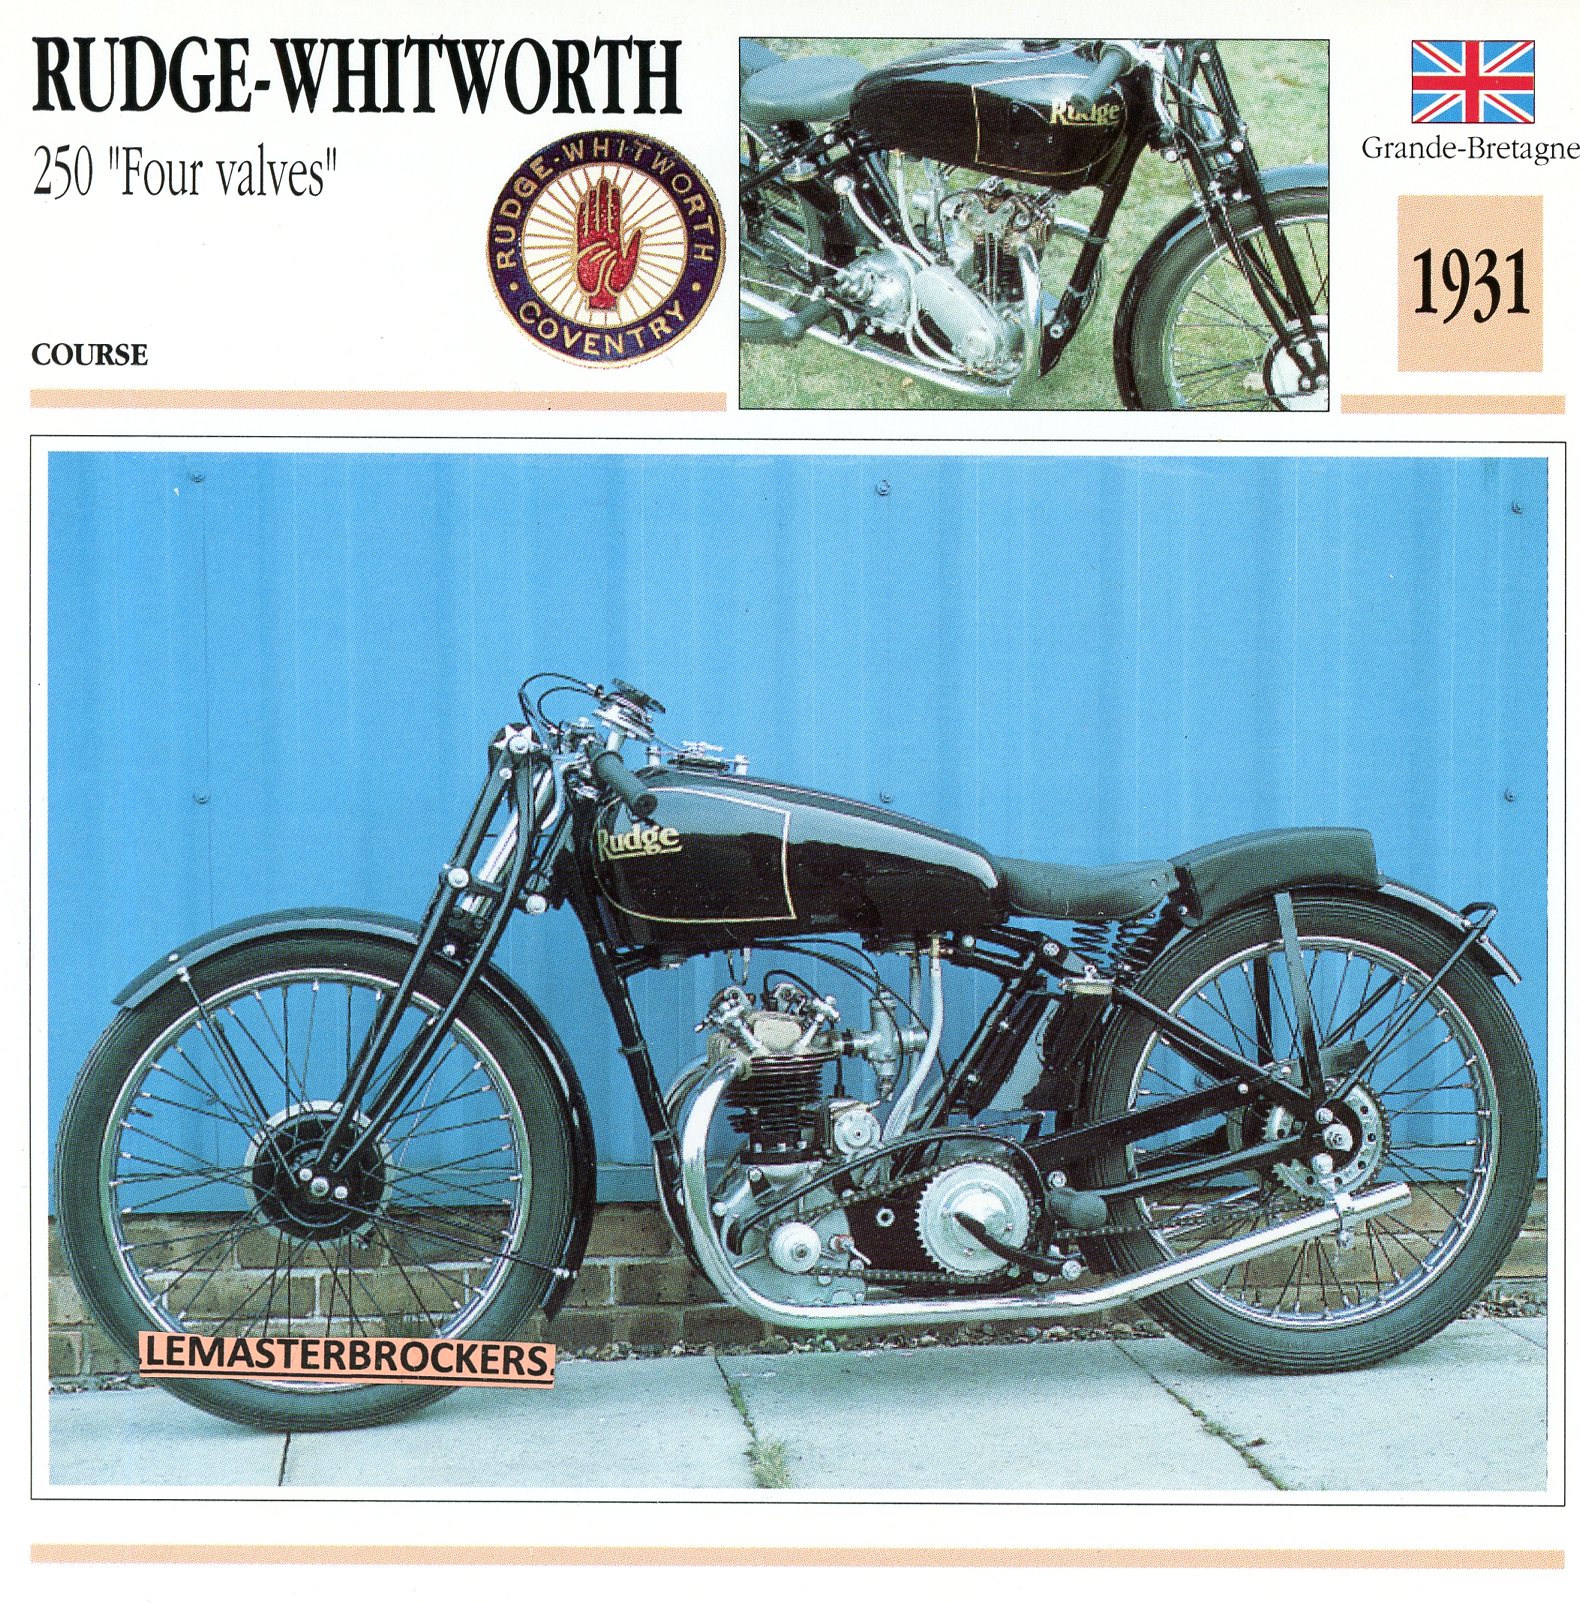 RUDGE WHITWORTH 250 FOUR VALVES 1931 - FICHE MOTO ATLAS